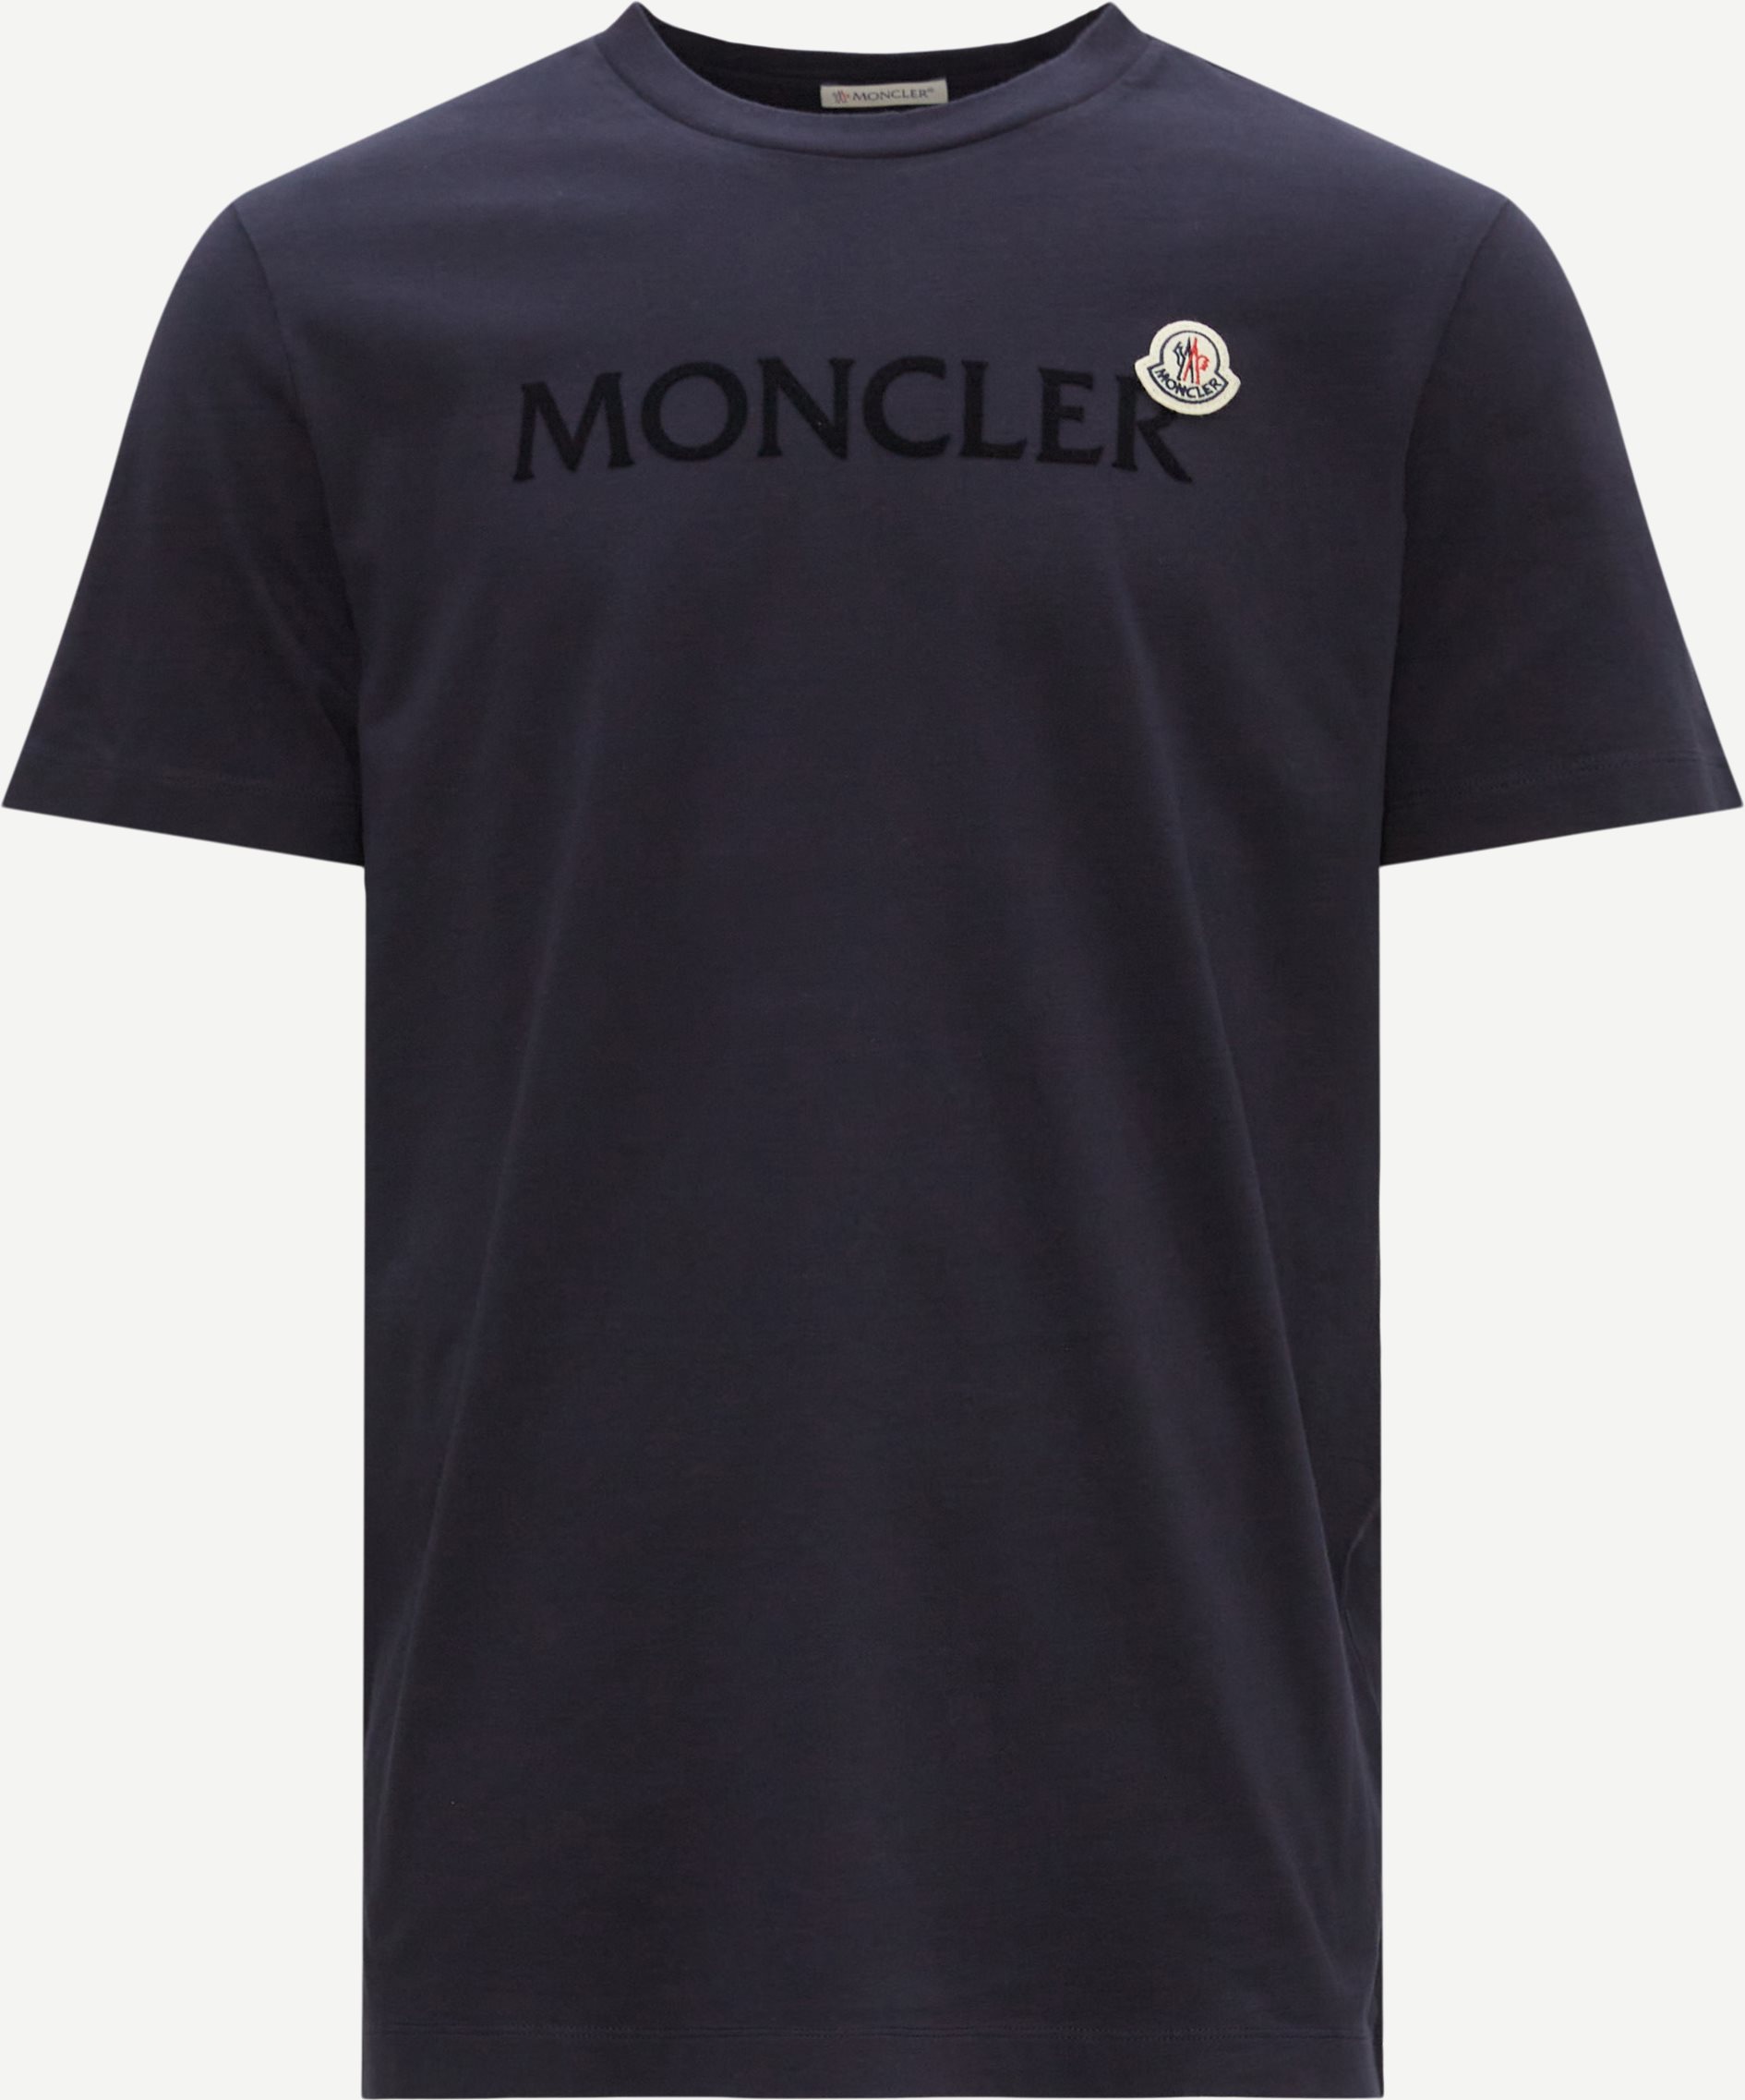 Moncler T-shirts 8C00064 8390T Blå